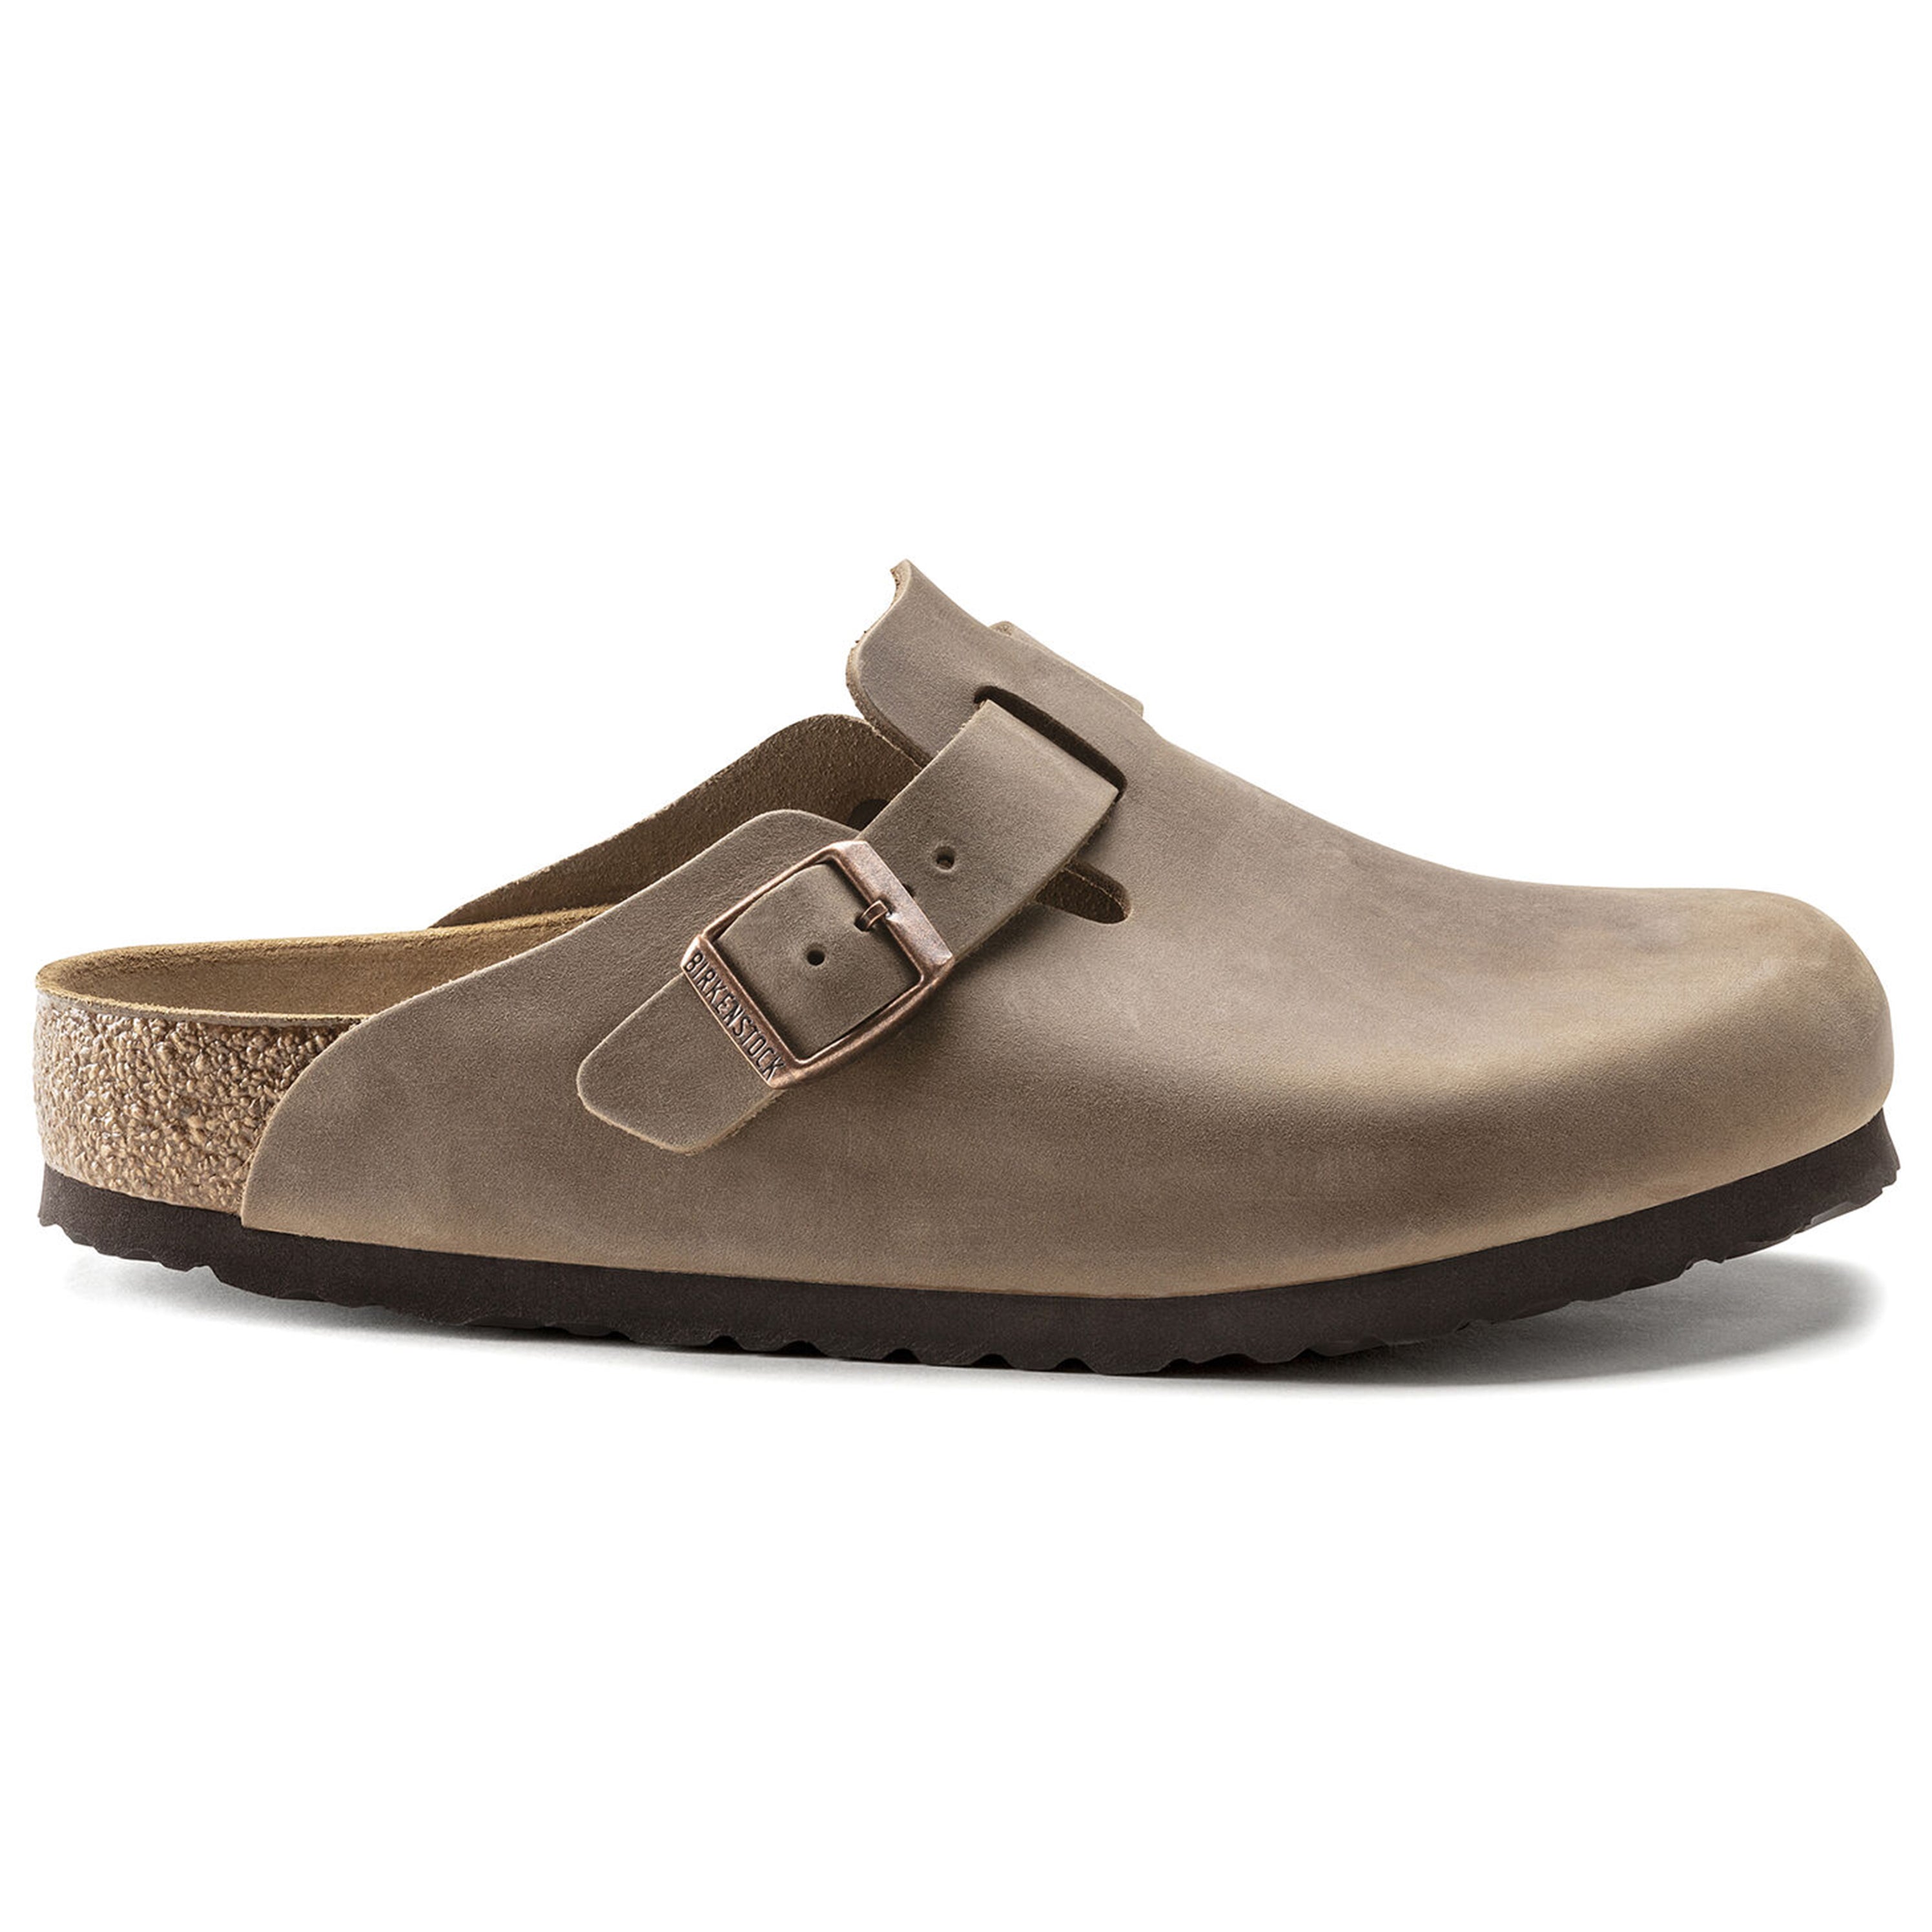 Birkenstock Boston BS Sandals - Tobacco Brown Oiled Leather